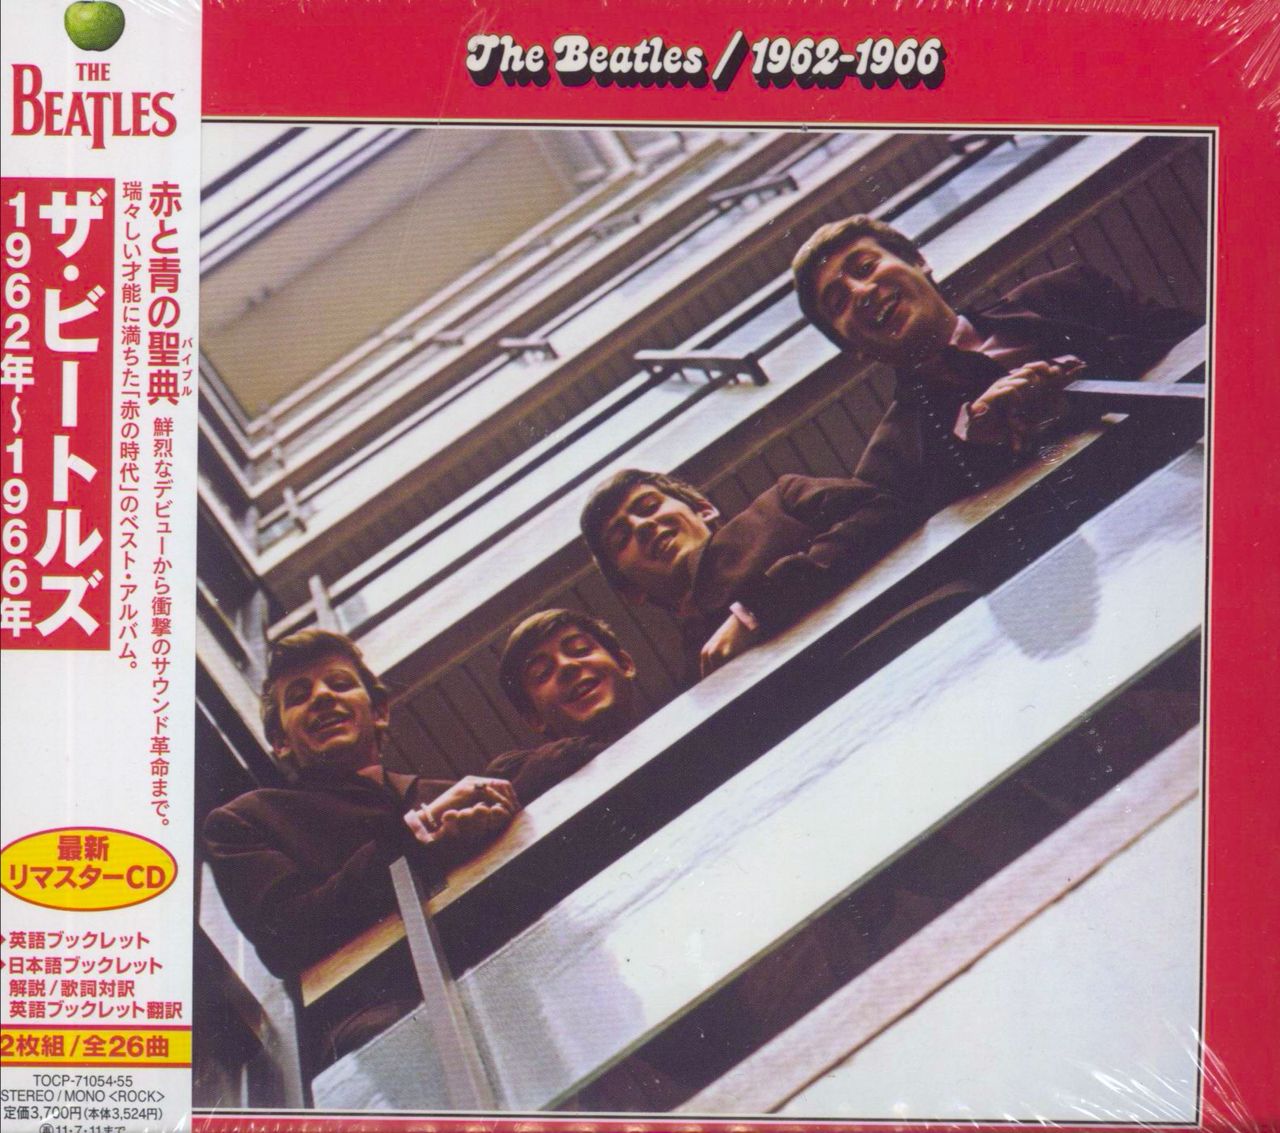 The Beatles 1962-1966 [The Red Album] Japanese 2-CD album set